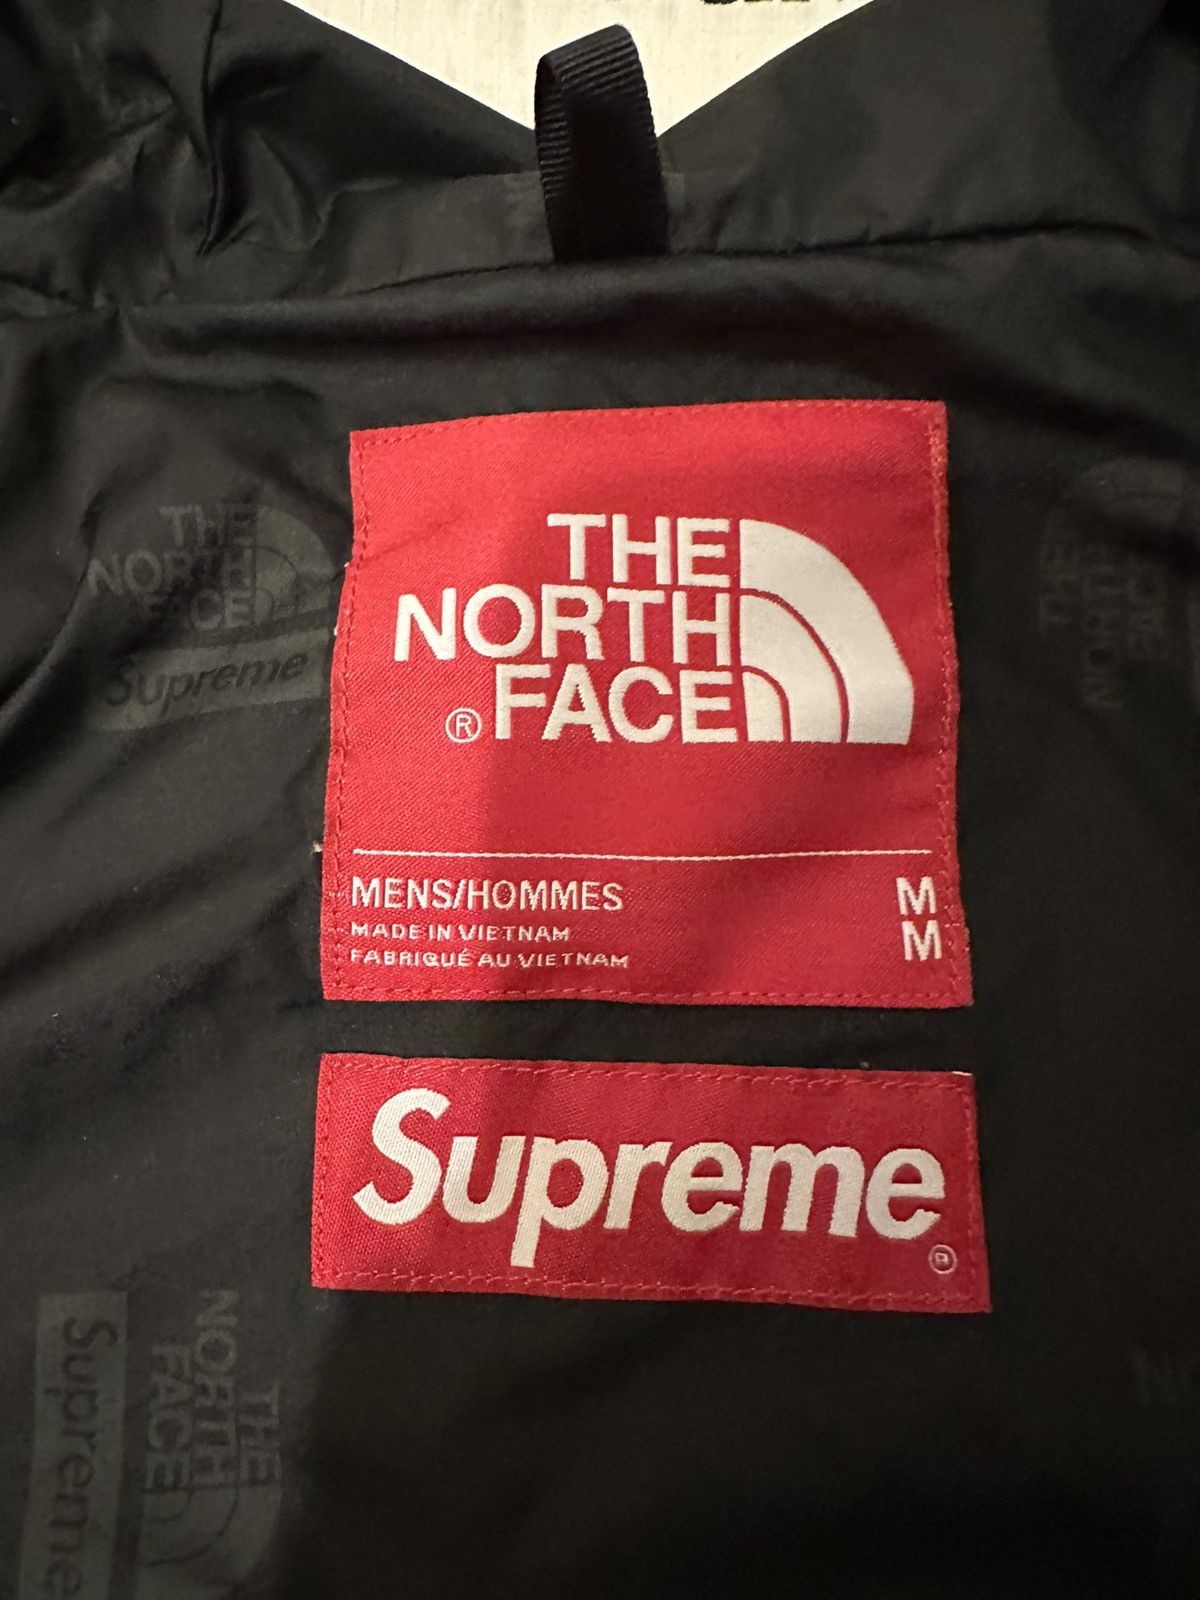 Supreme Supreme x The North Face x Goretex Expedition Jacket (FW18) Size US M / EU 48-50 / 2 - 4 Thumbnail